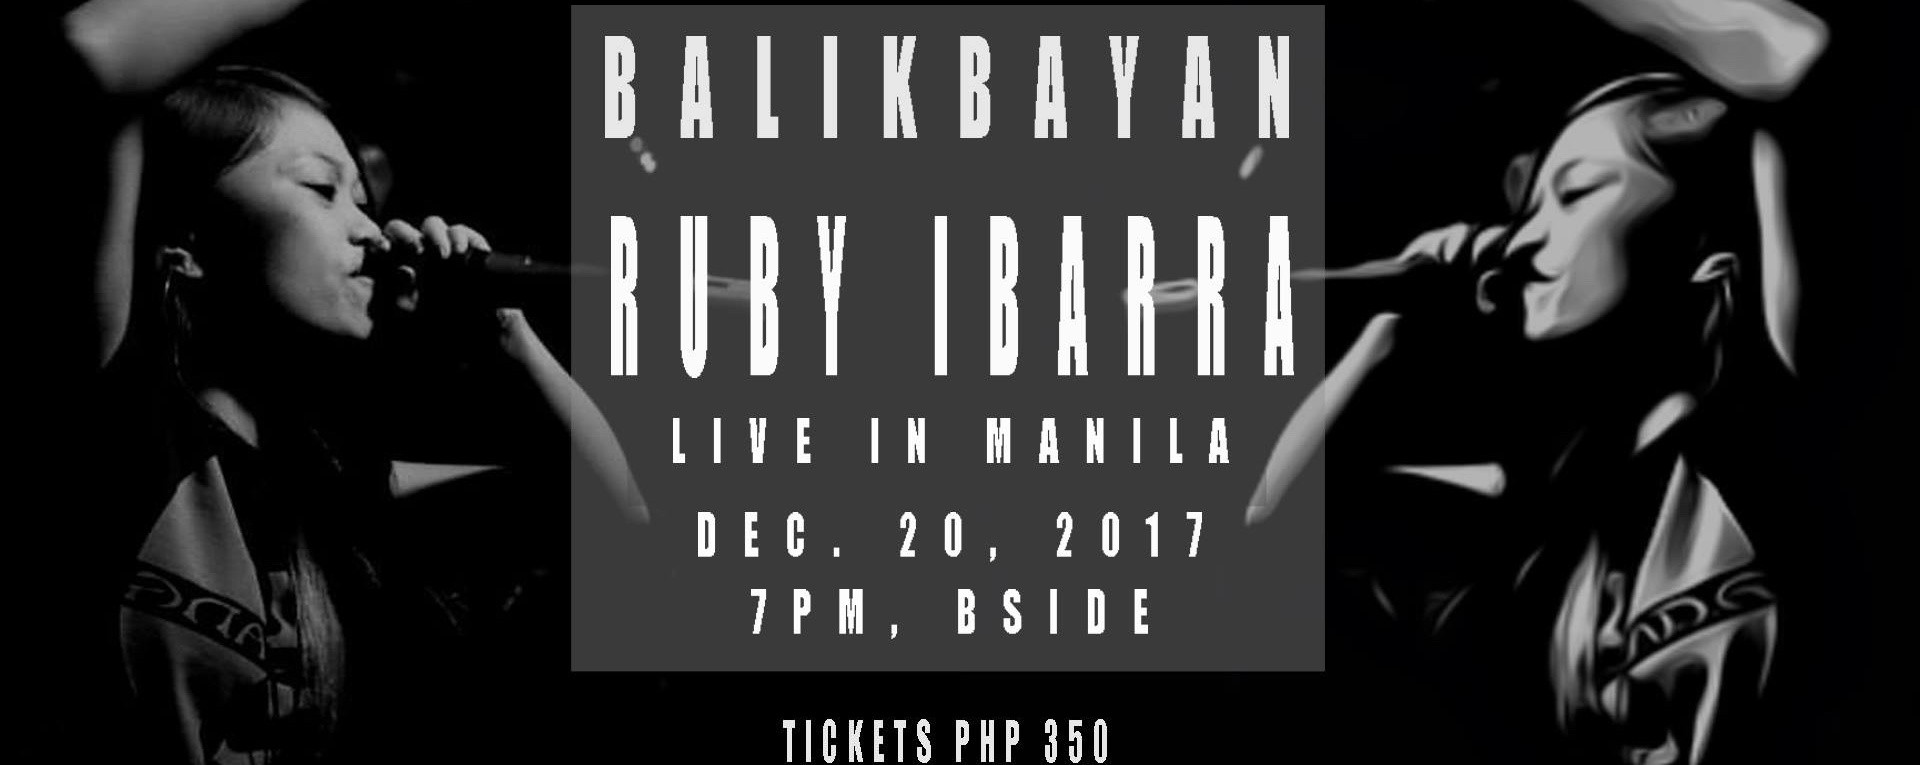 Balikbayan: Ruby Ibarra Circa '91 Live